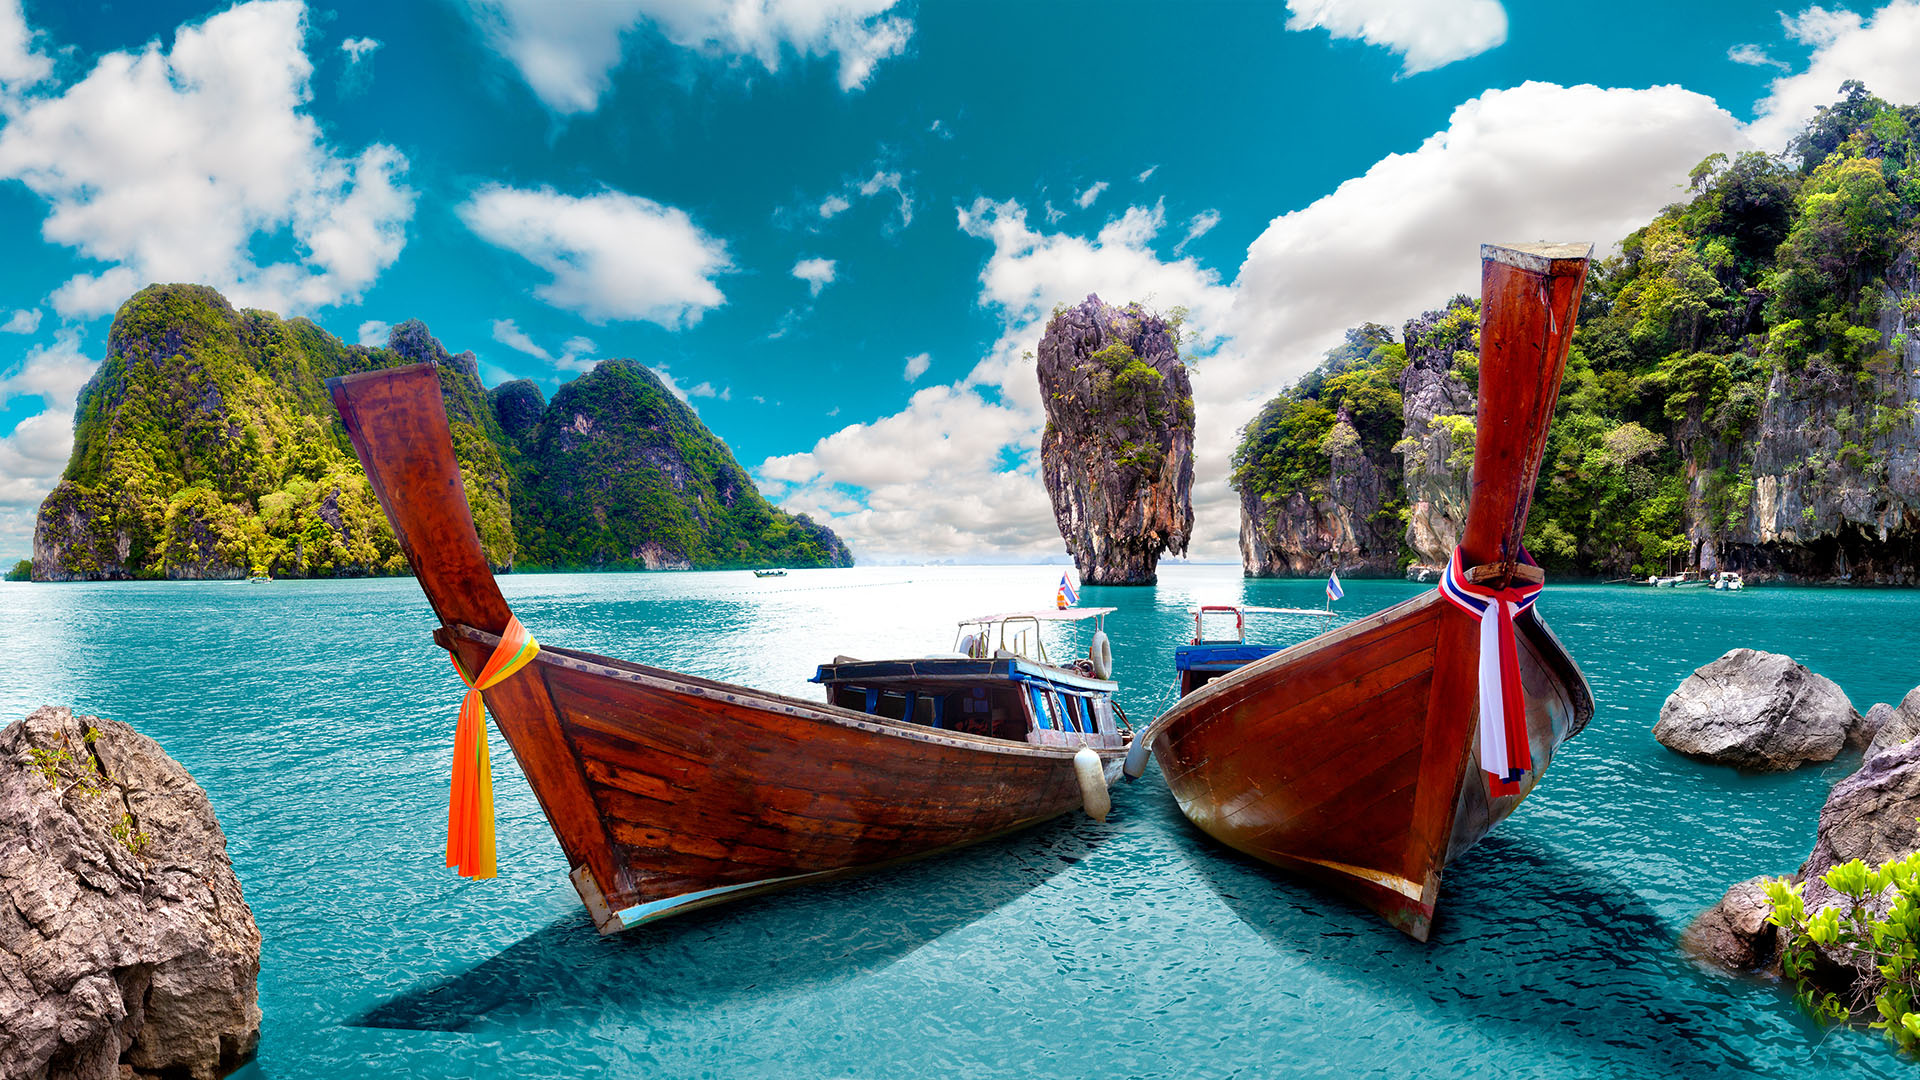 Phuket wanderlust, Tempting escape, Thailand's charm, Book your trip, 1920x1080 Full HD Desktop